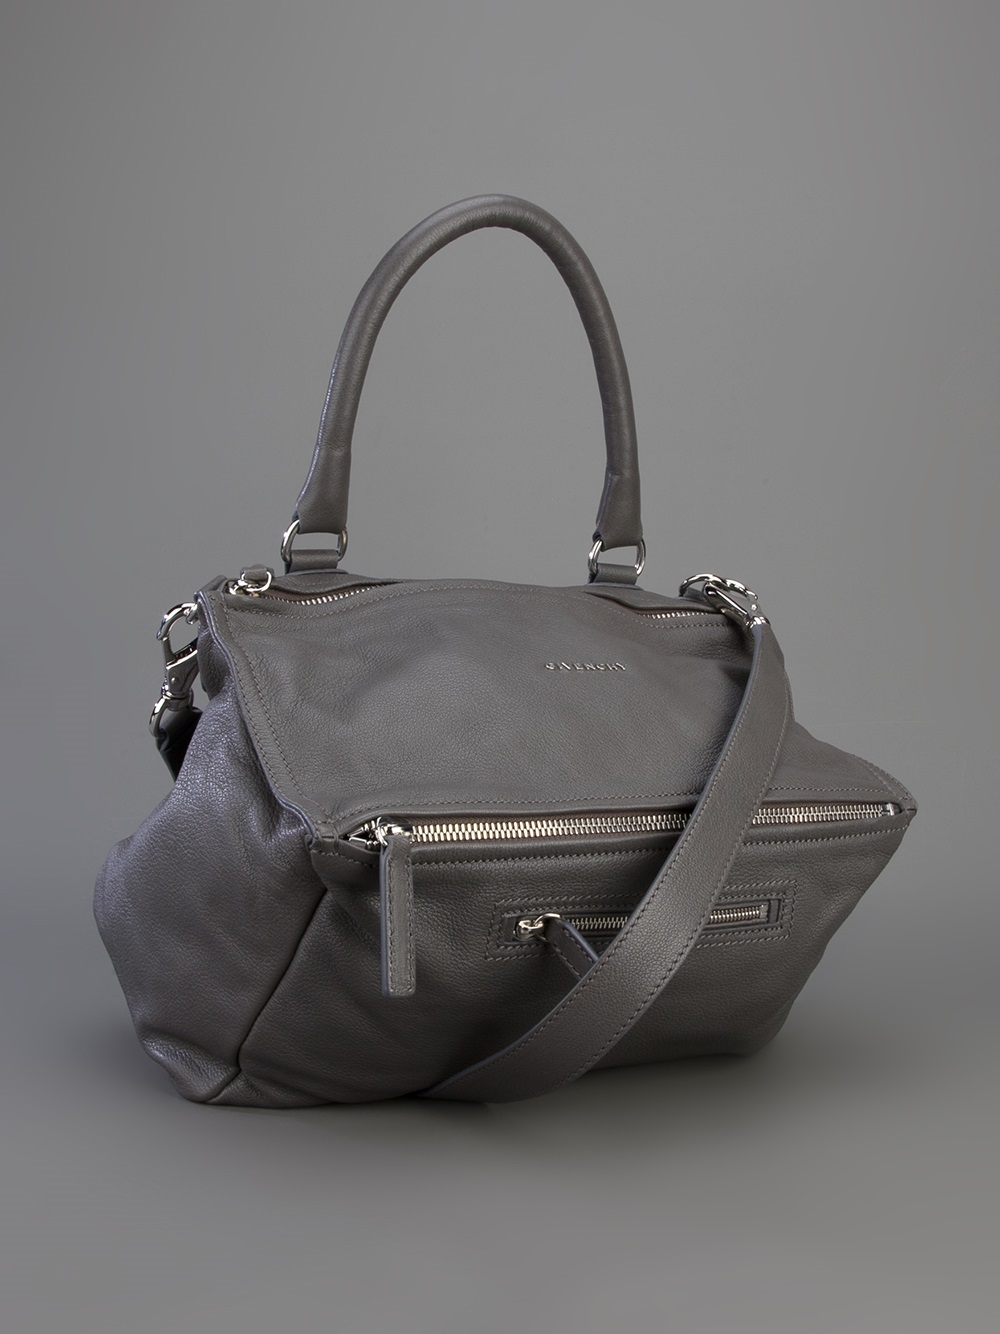 Givenchy Pandora Bag in Gray | Lyst